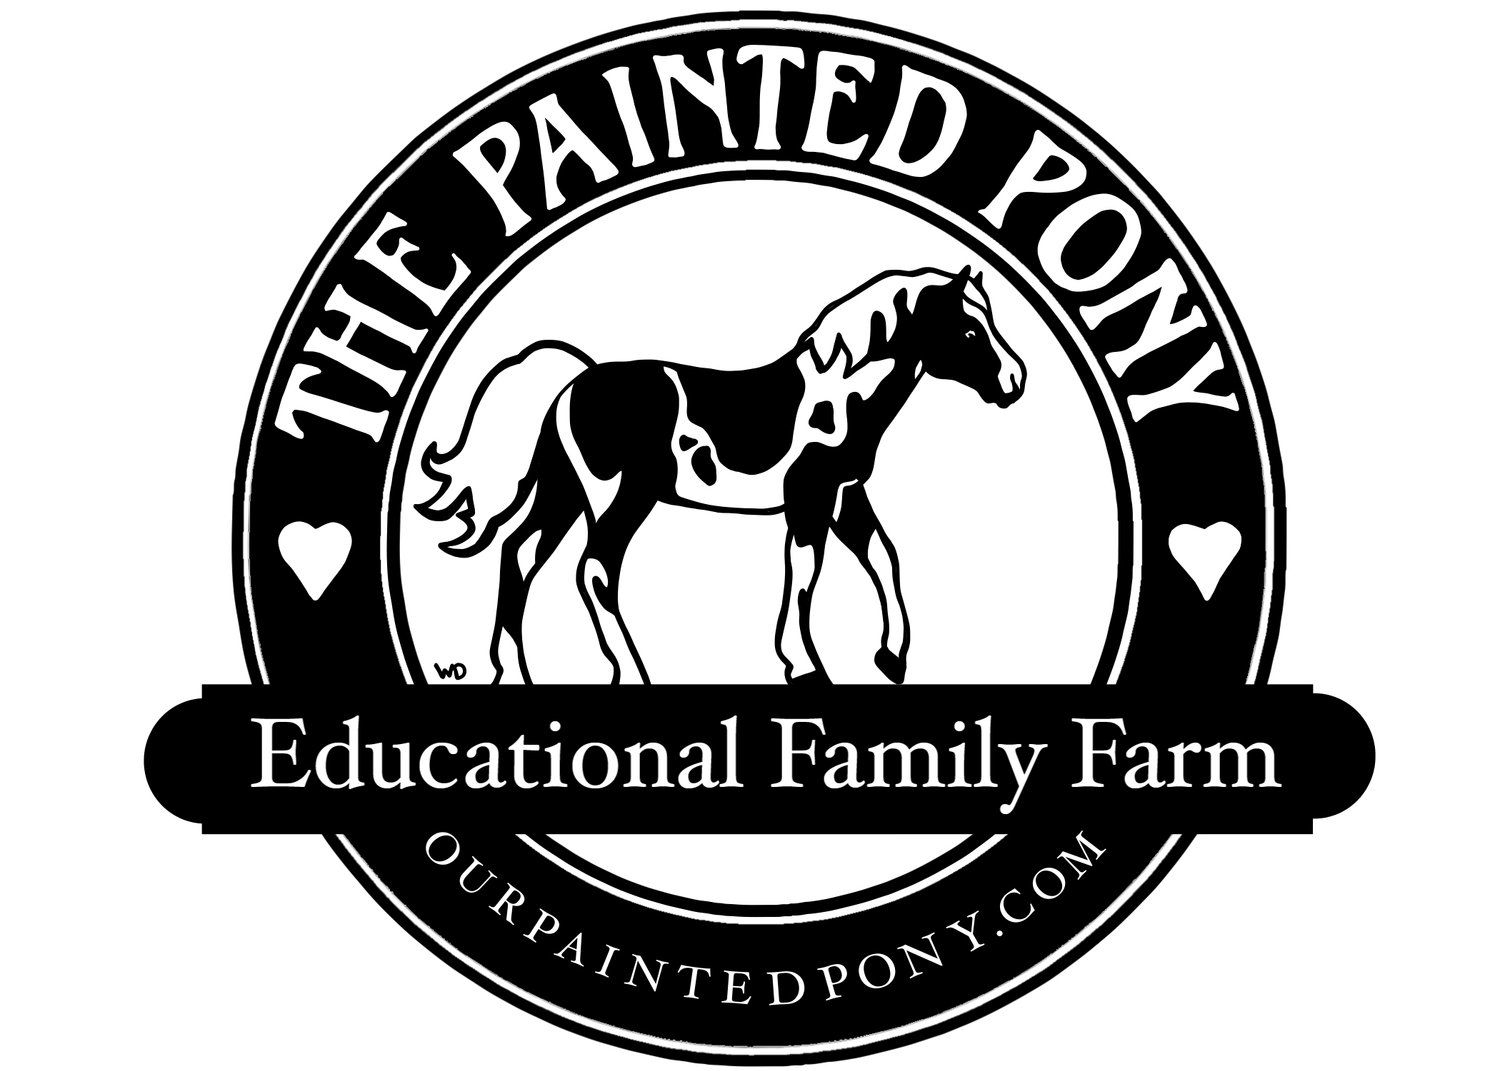 The Painted Pony Farm